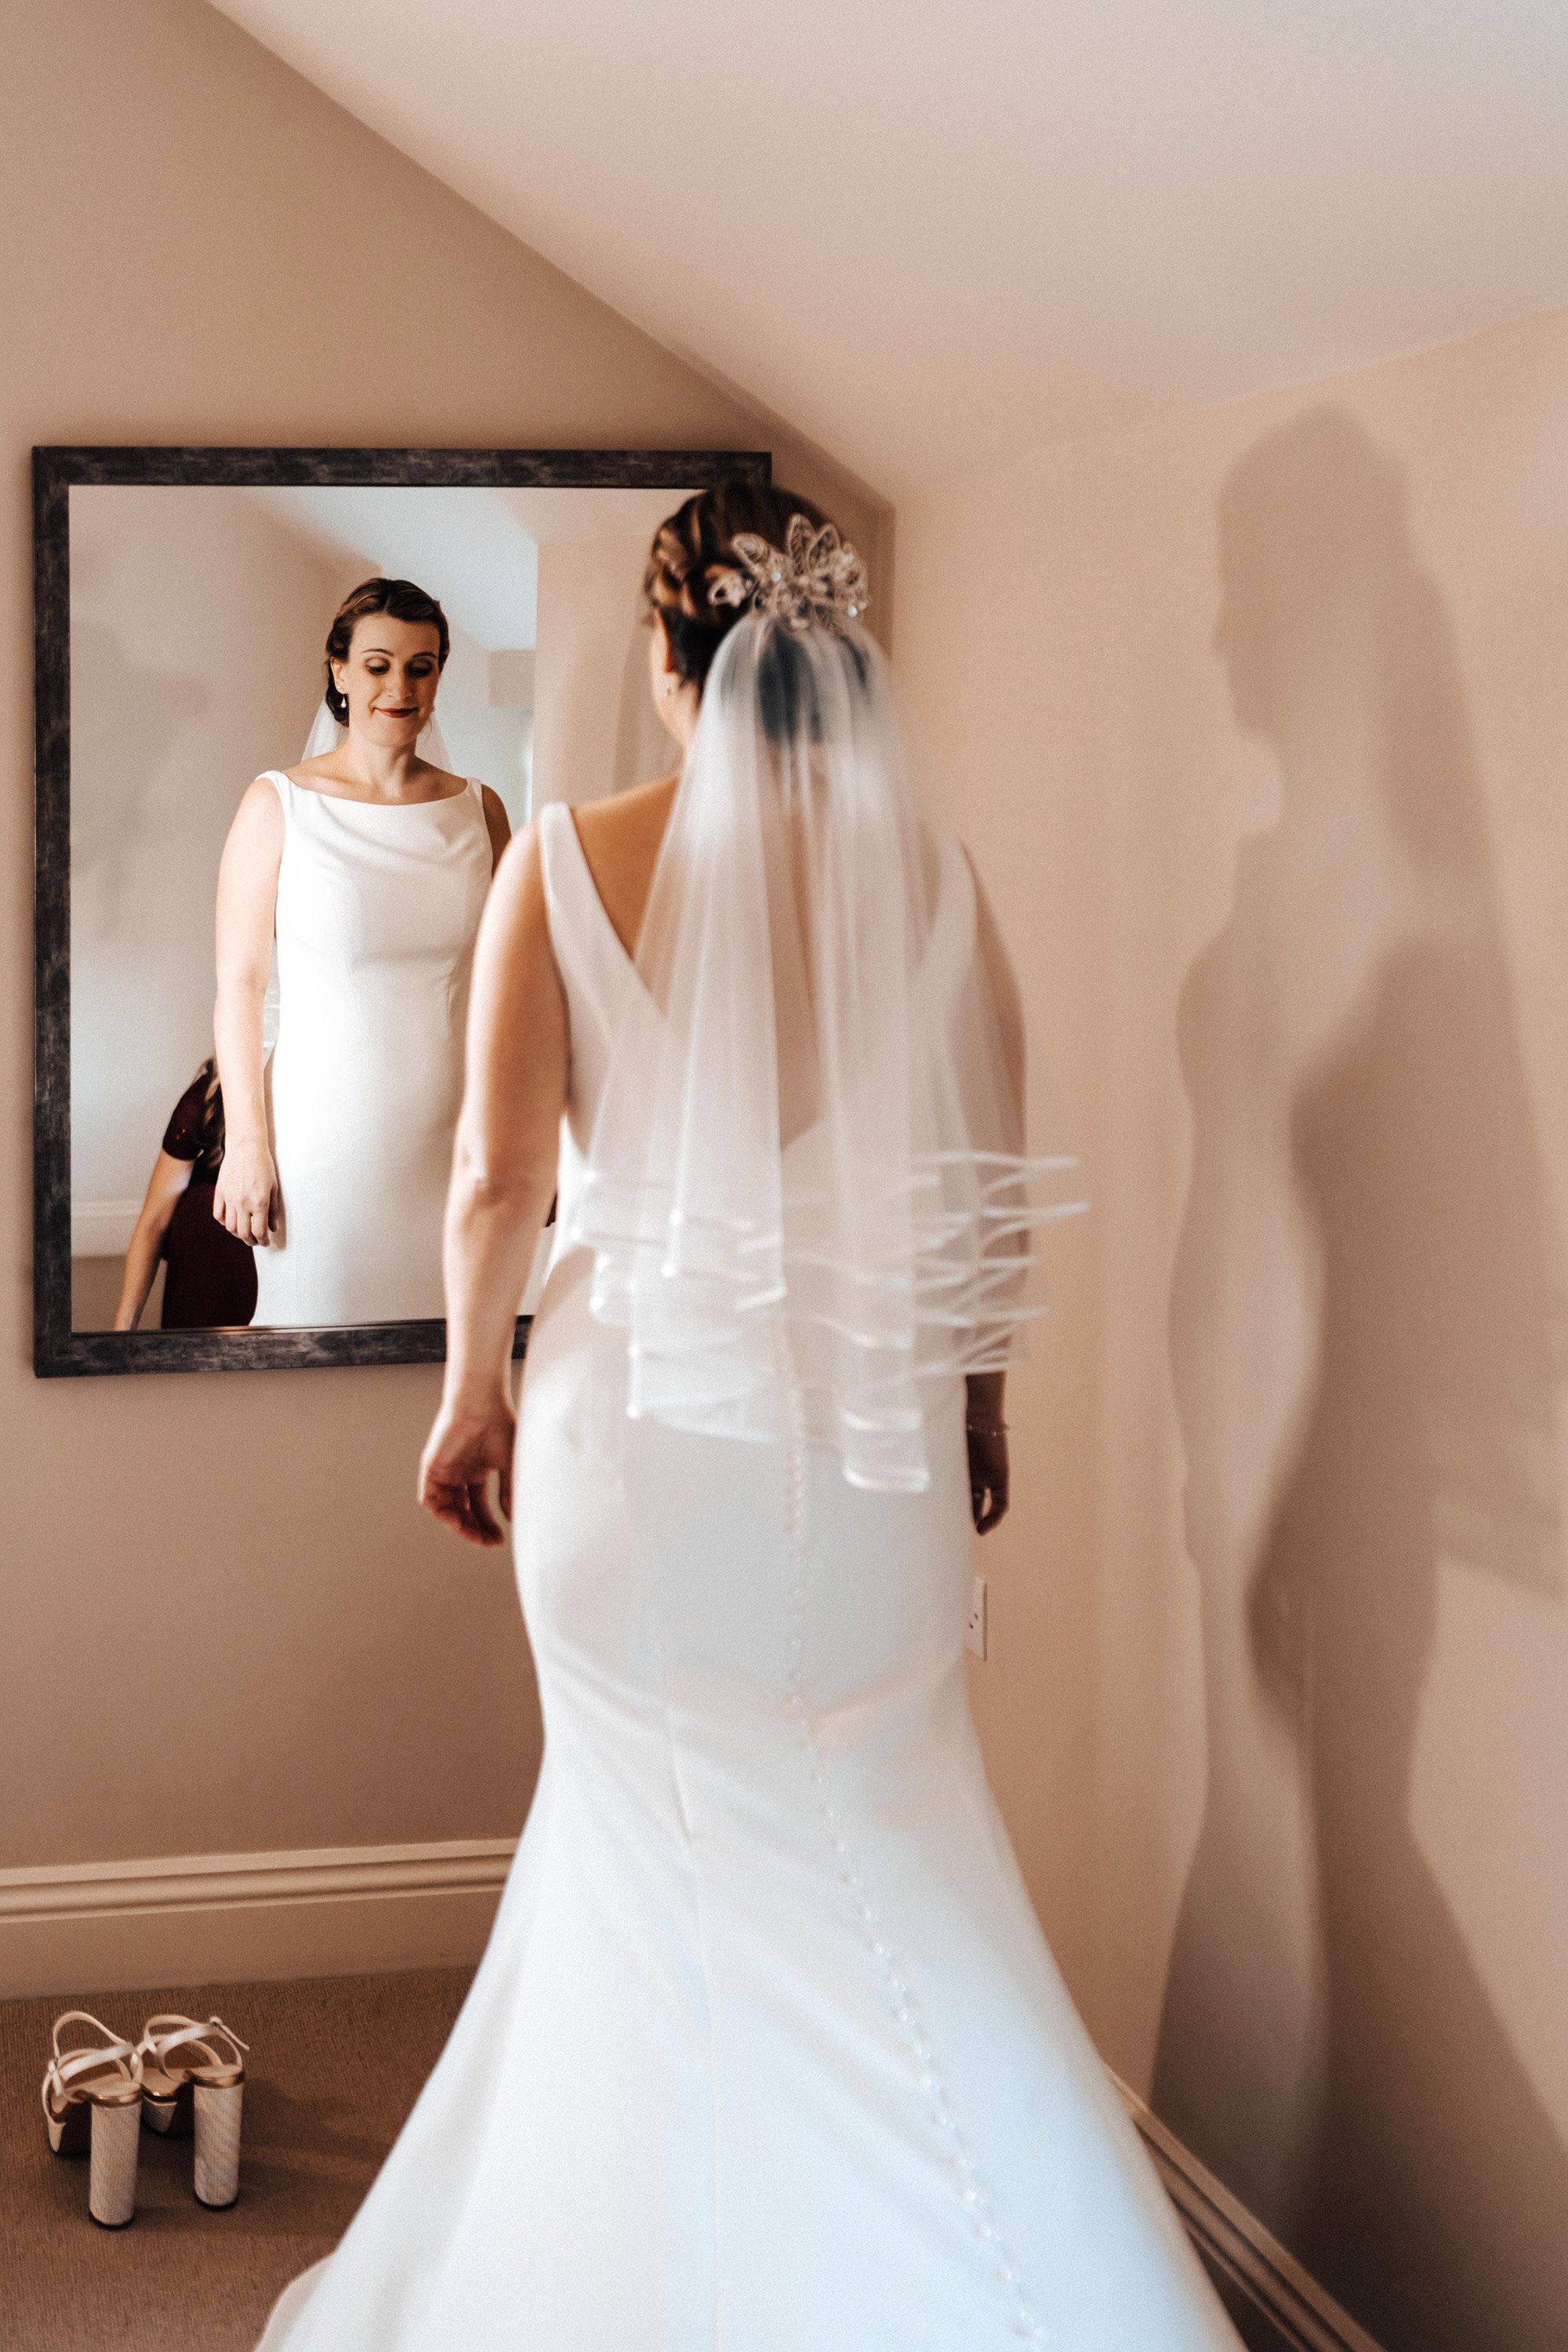 Pregnant bride looking in mirror on christmas wedding morning wearing elegant dress